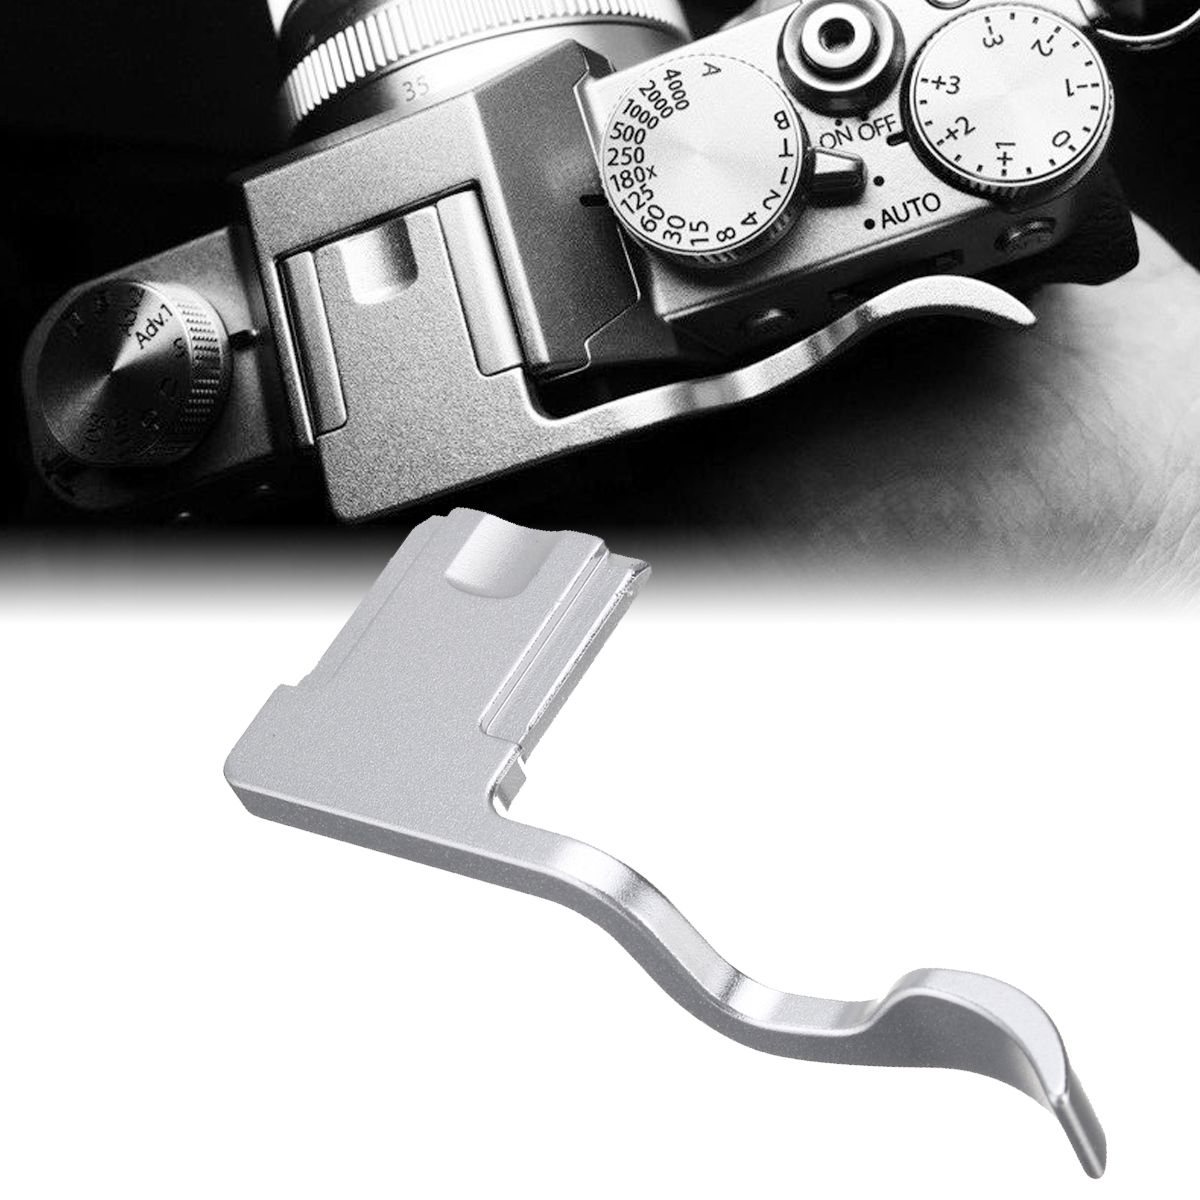 Bike-Sport-Camera-Thumb-Rest-Grip-Aluminum-Finger-Handle-Buckle-For-Fuji-XT10XT20-X-T10X-T20-1642010